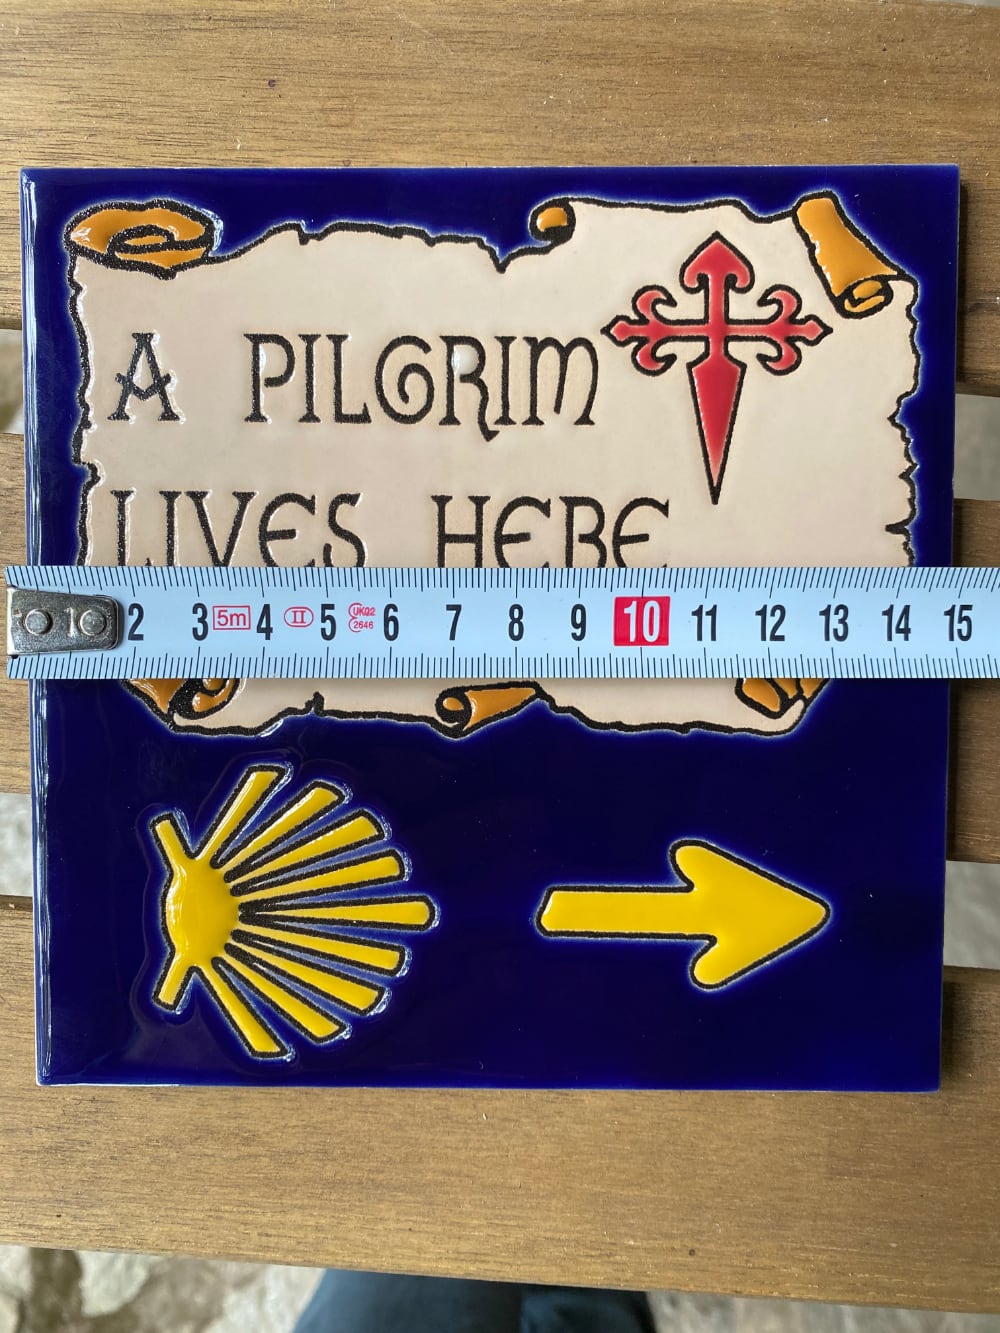 "A Pilgrim Lives Here" tile